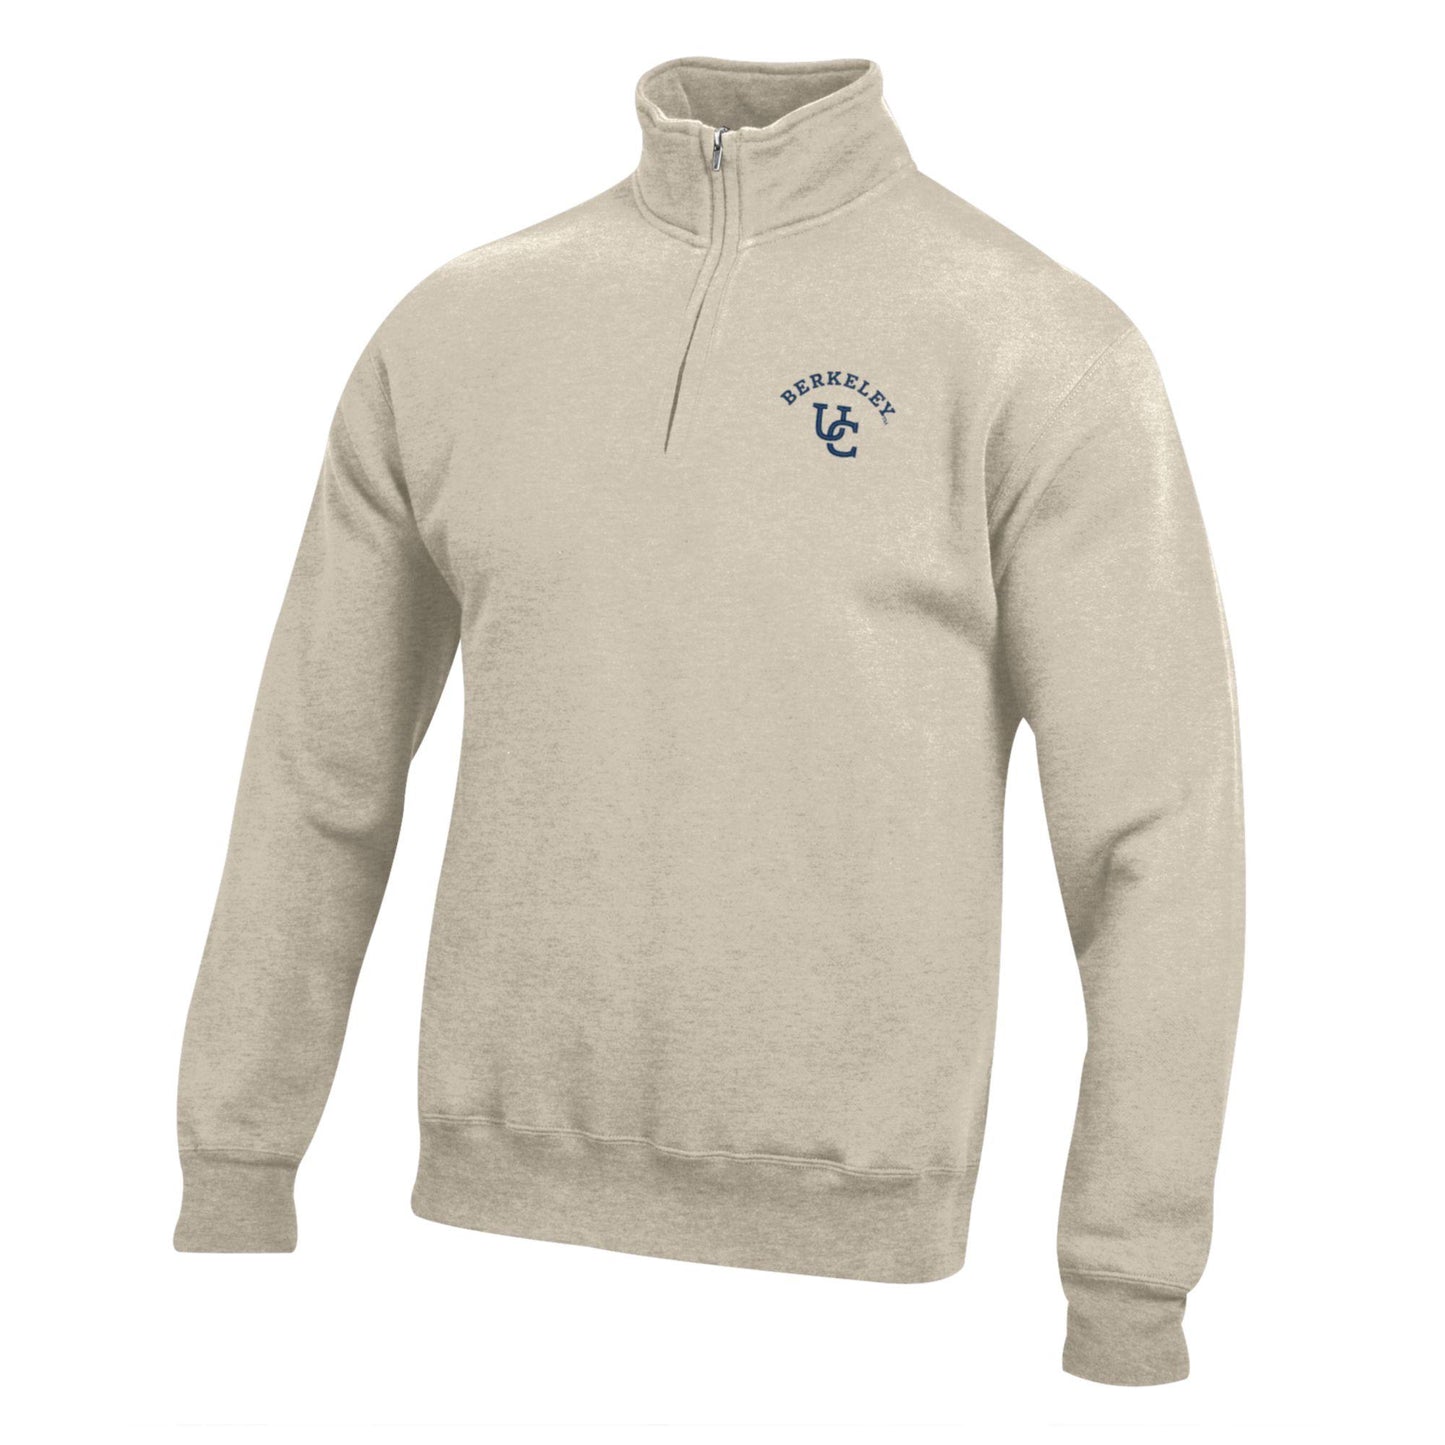 U.C. Berkeley Cal embroidered Big Cotton 1/4" Zip men's sweatshirt with Interlocking UC logo-Oatmeal-Shop College Wear